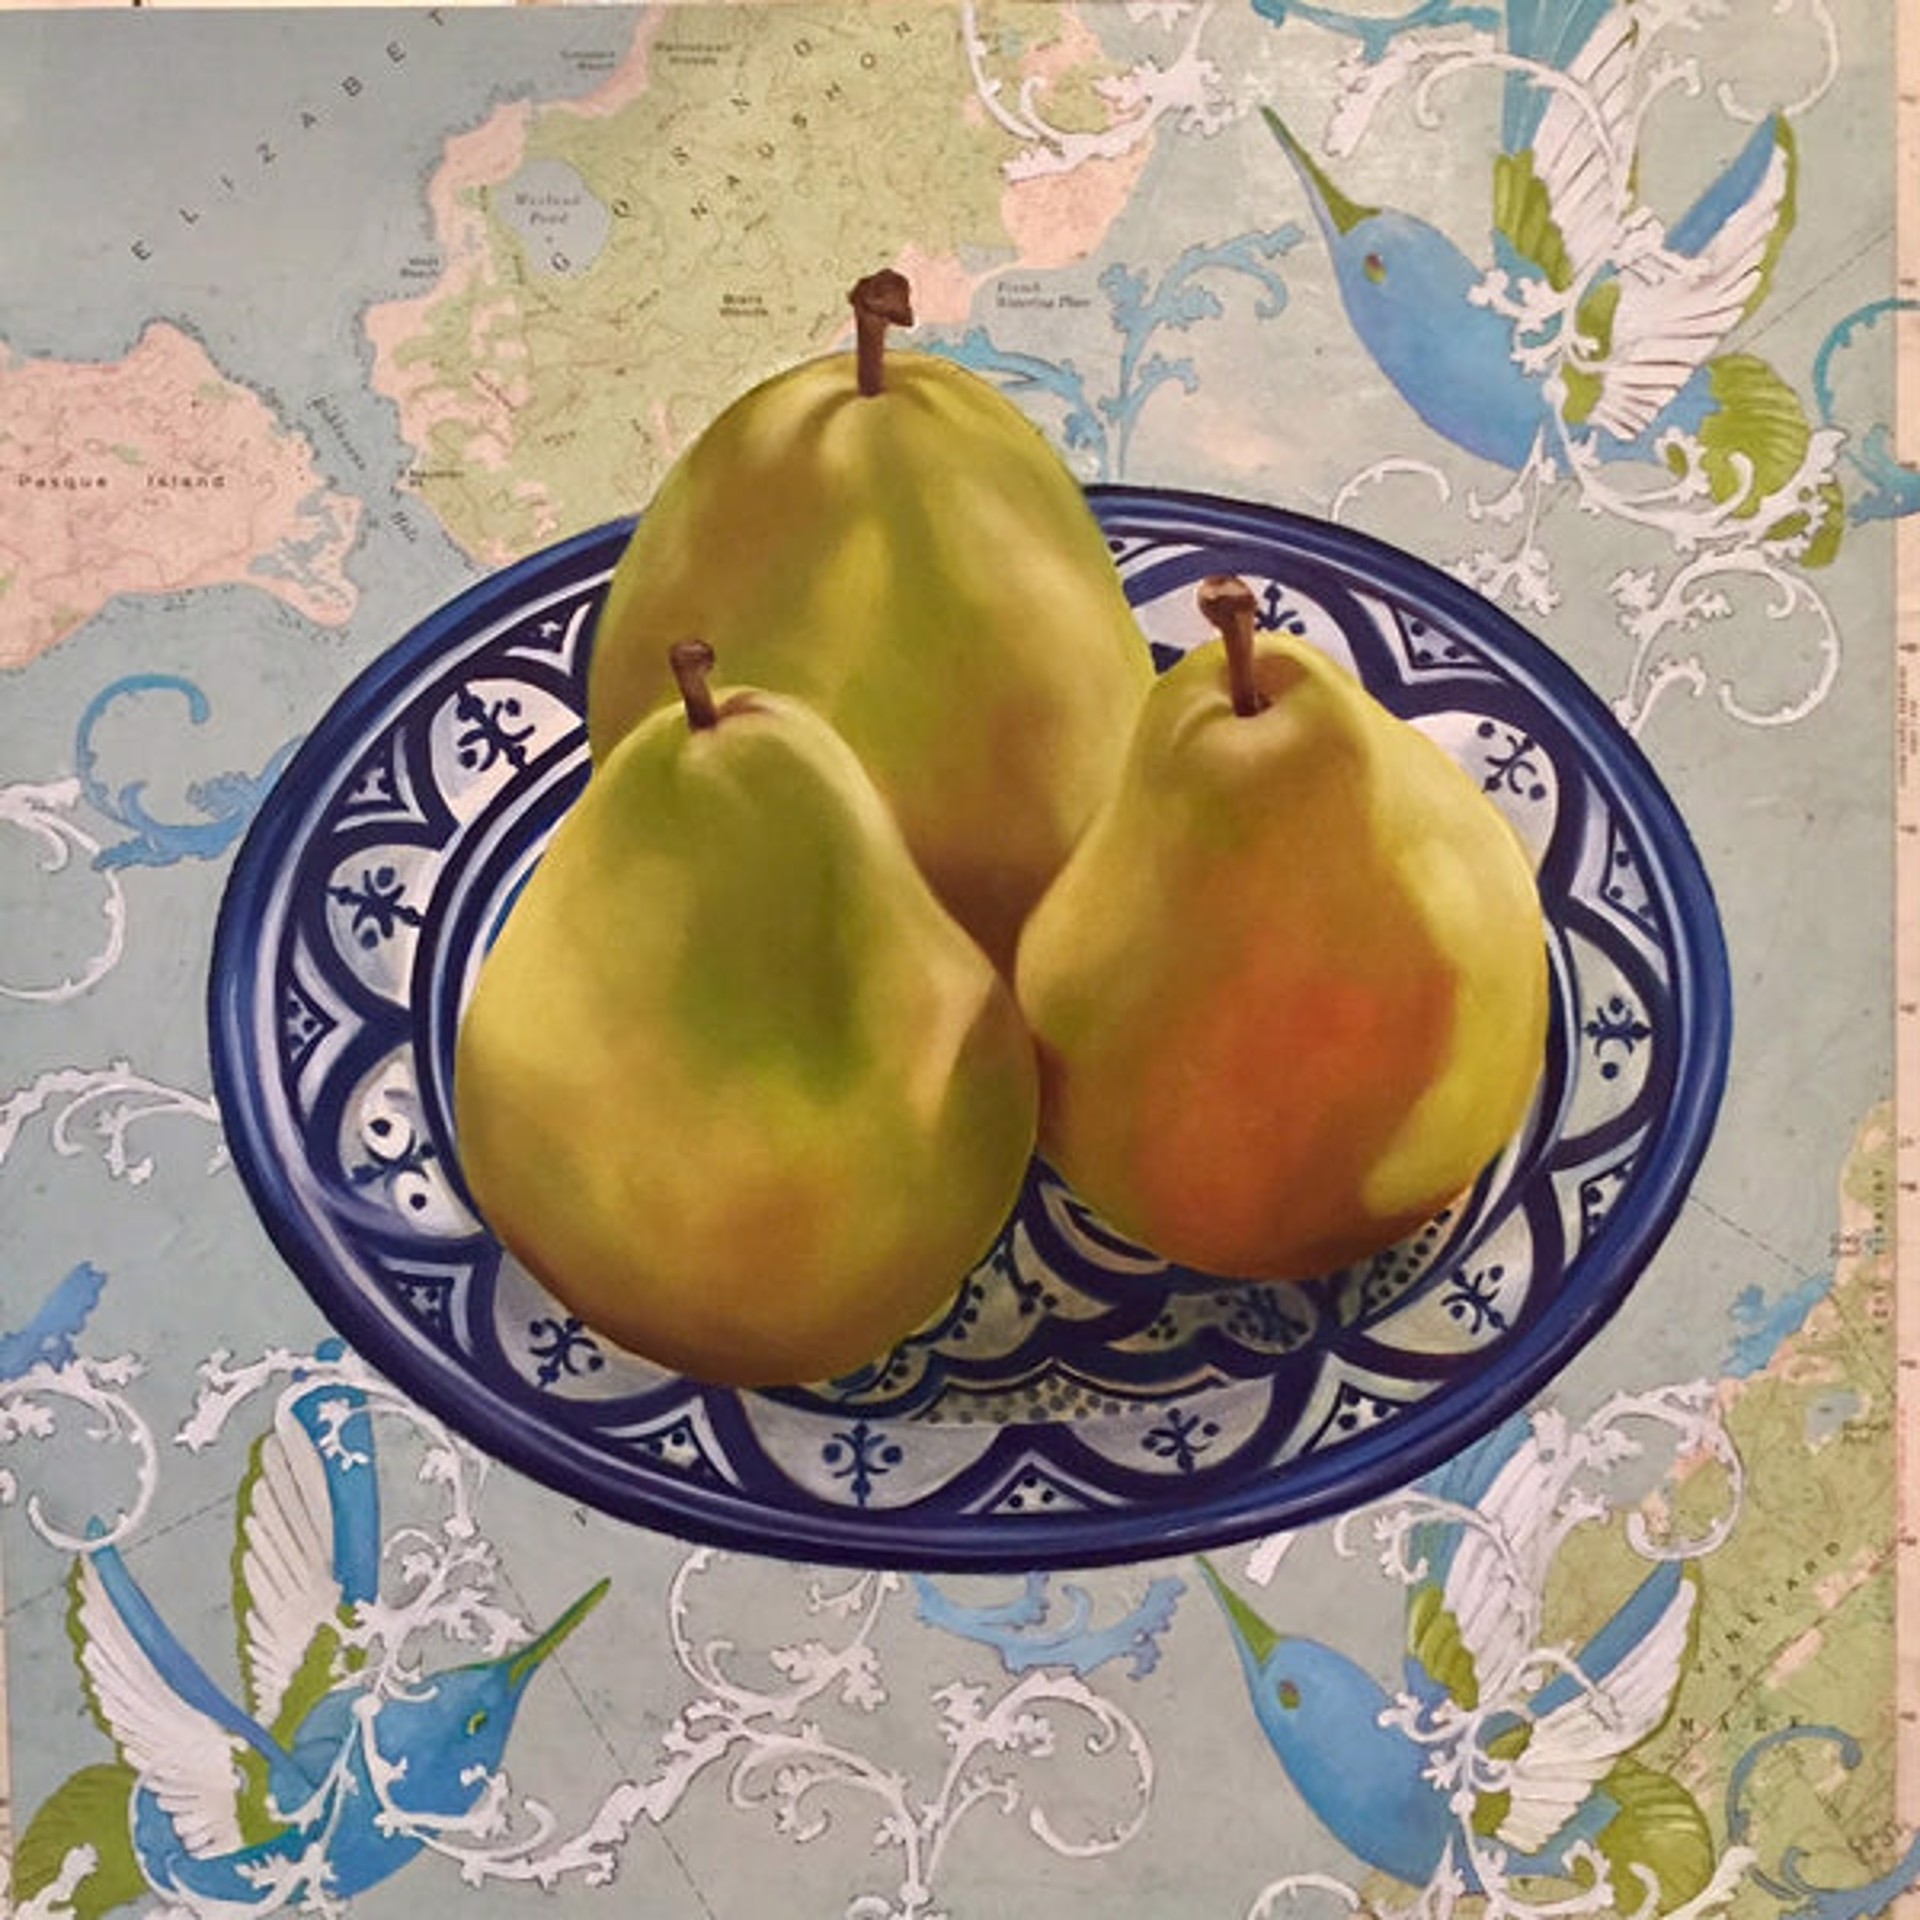 Island Pears by Stephanie Danforth